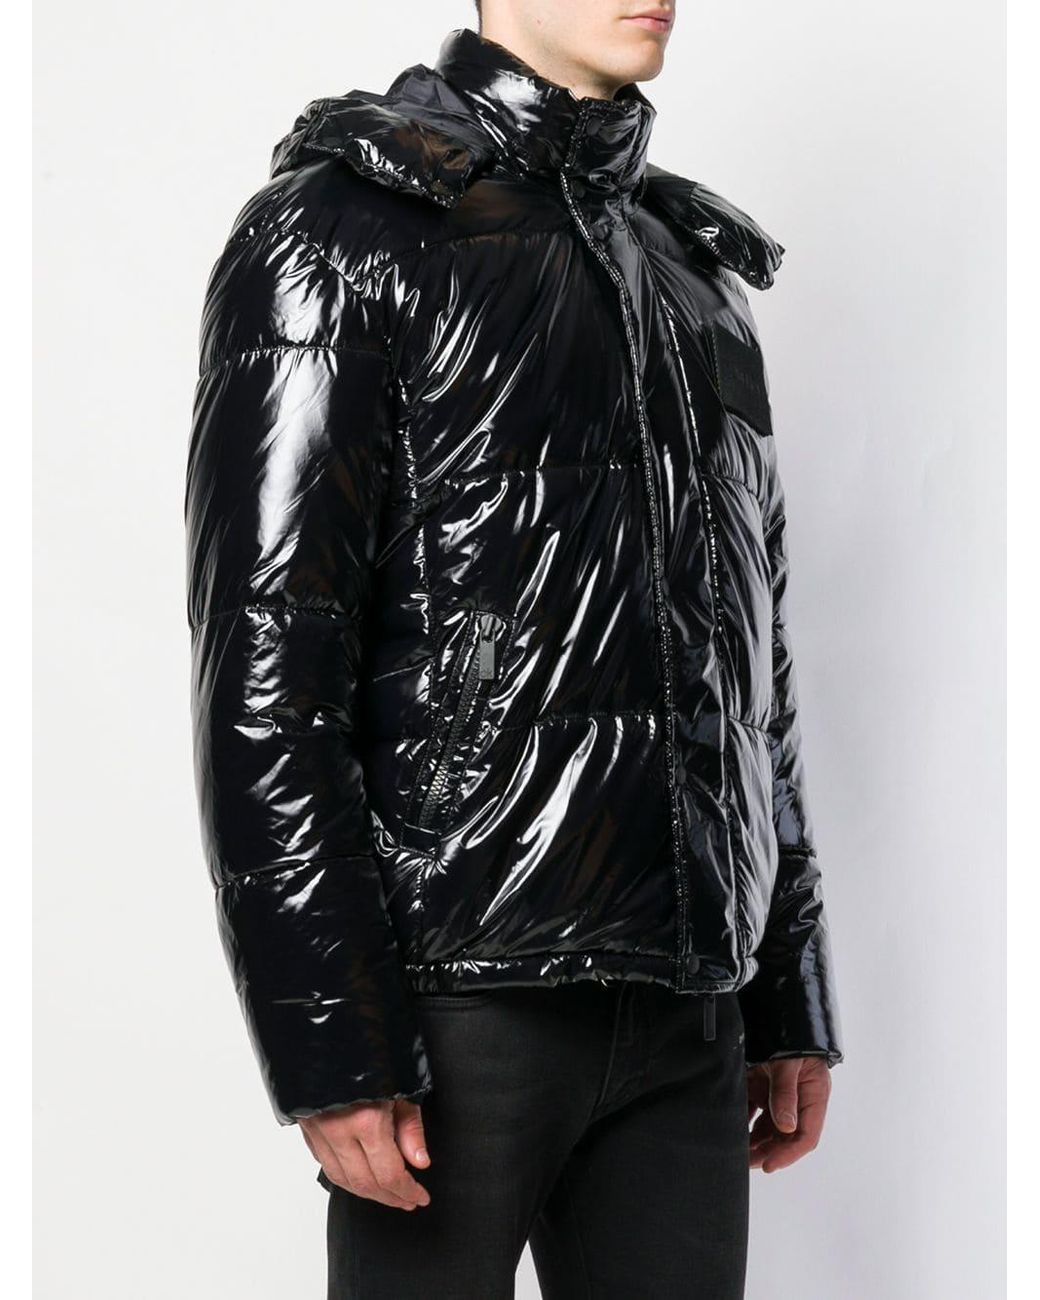 Calvin Klein Liquid Shine Puffer Jacket in Black for Men | Lyst Canada